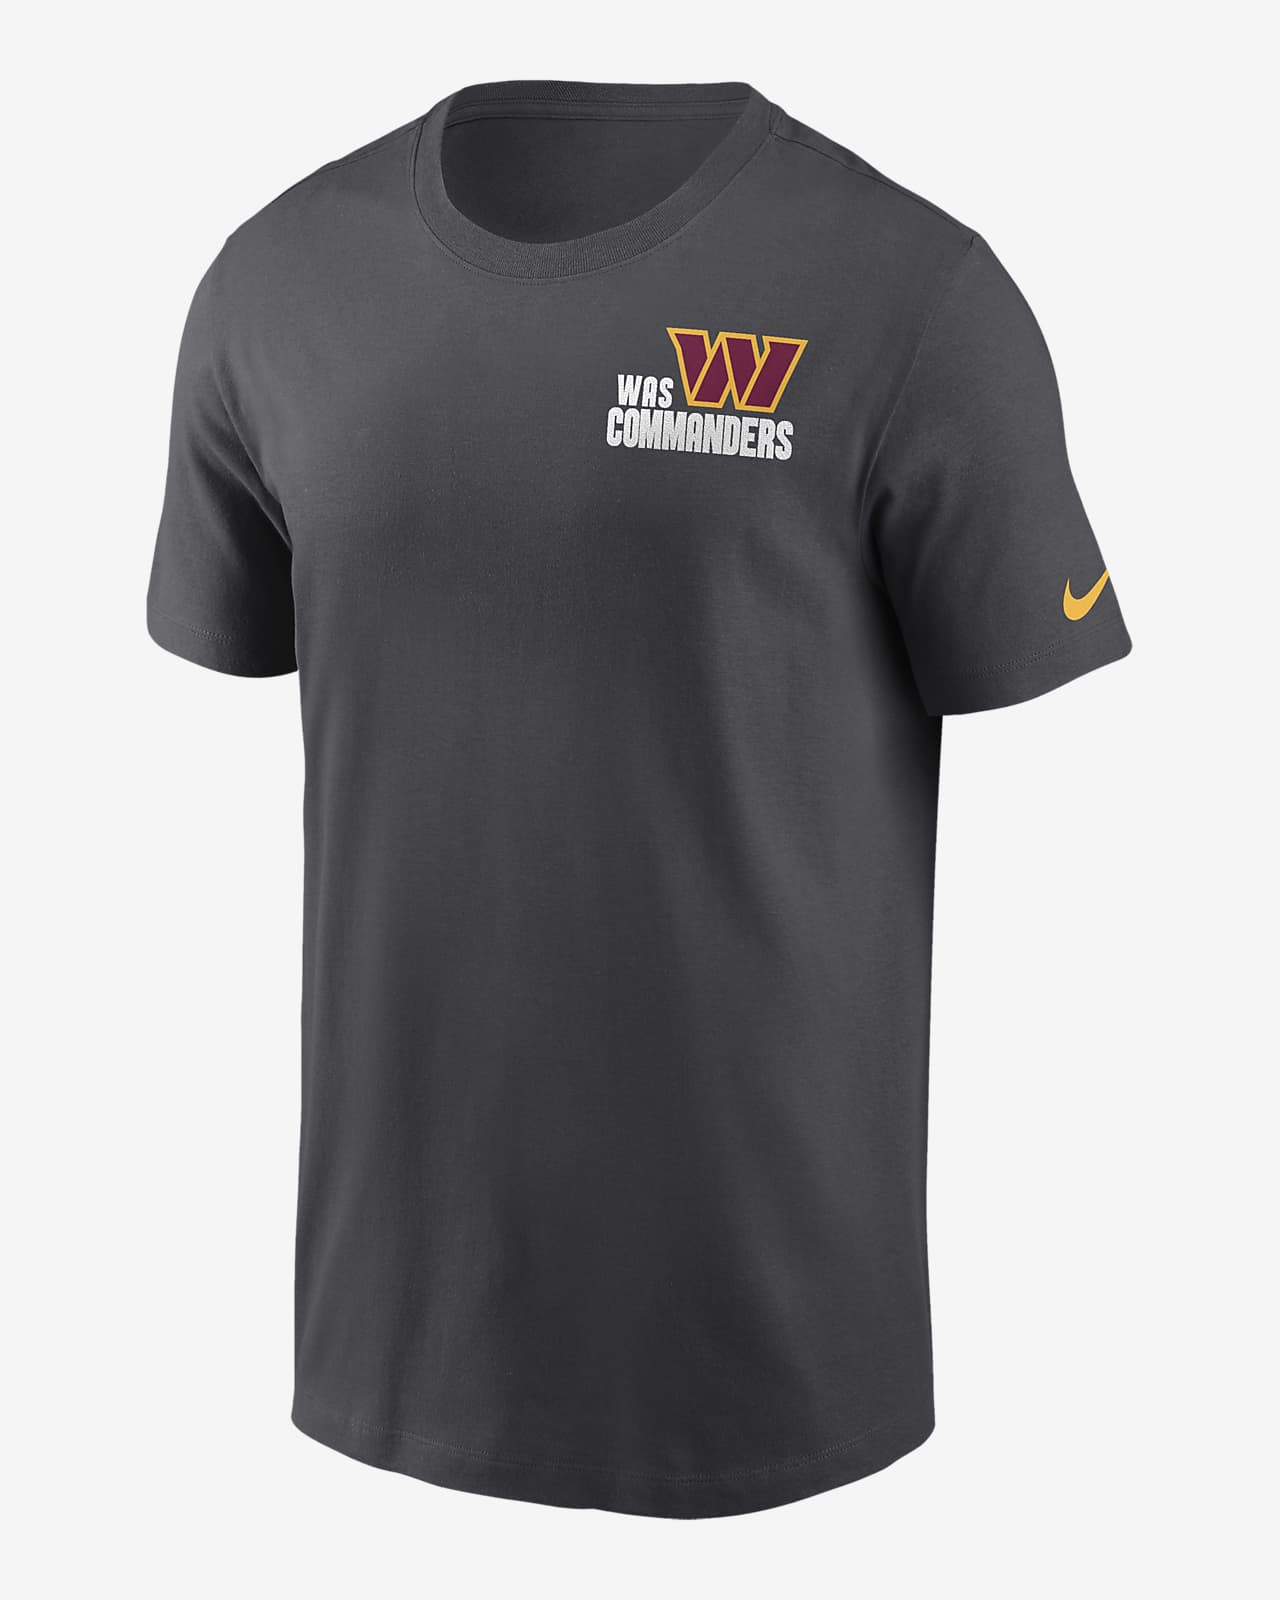 Washington Commanders Blitz Team Essential Men's Nike NFL T-Shirt